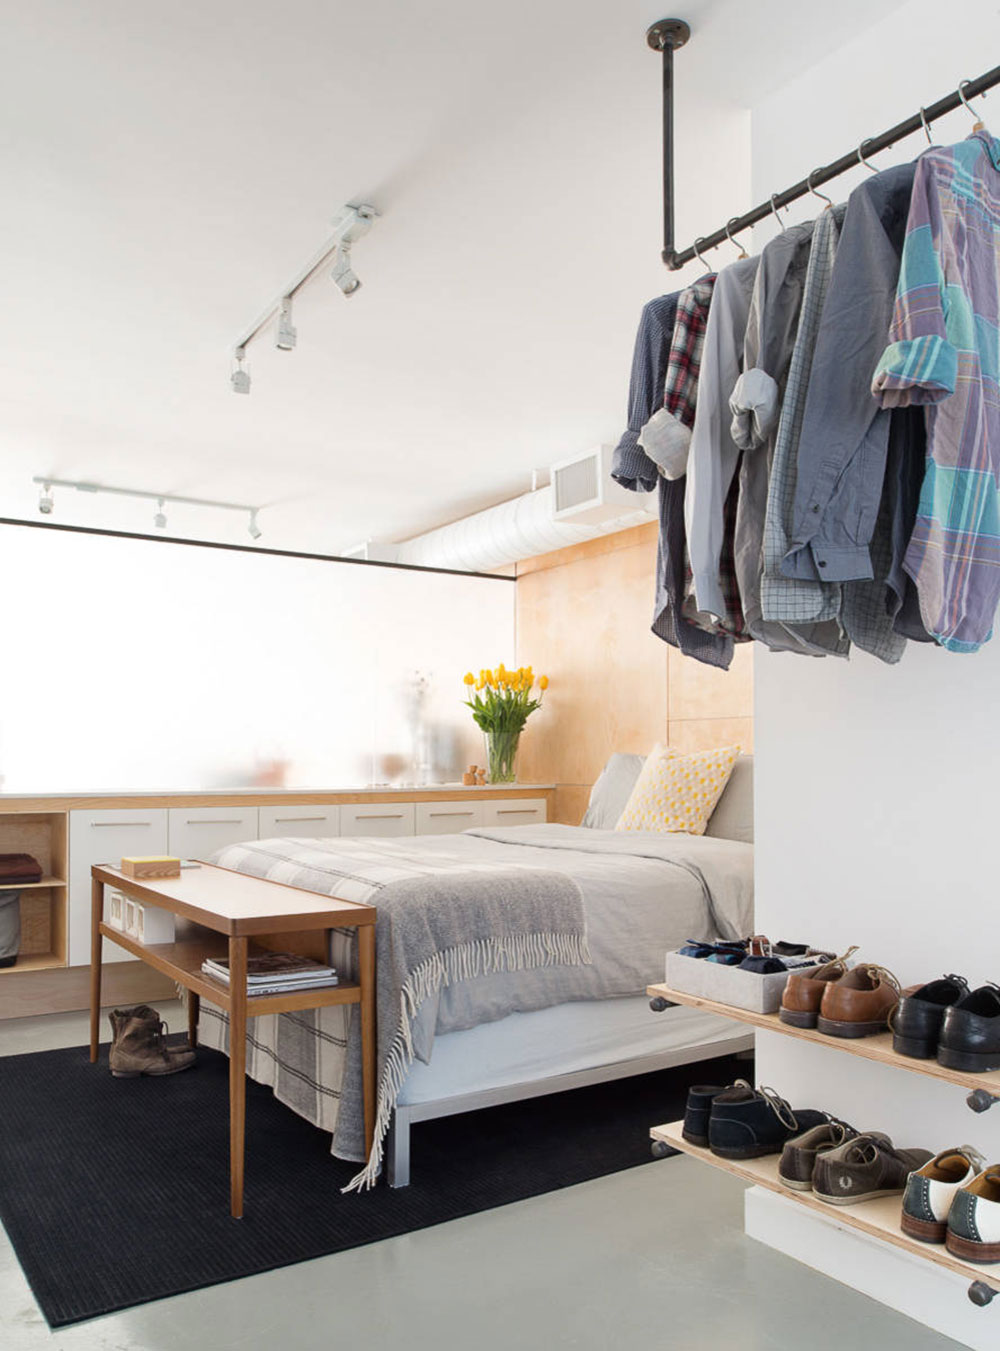 clo4 Corner closet ideas to help you maximize your space